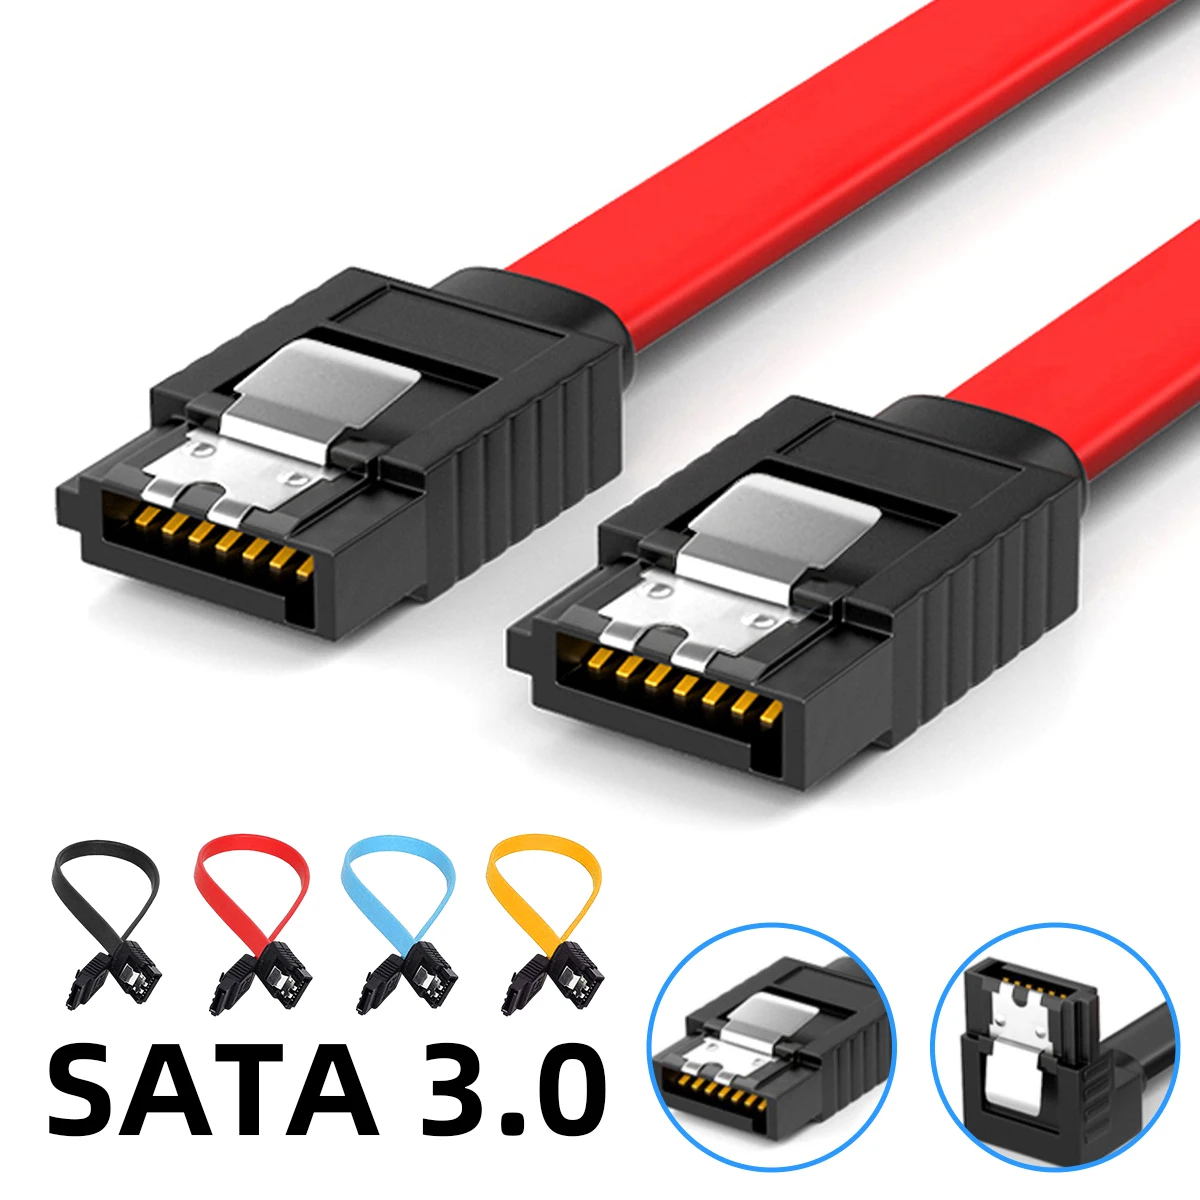 Sata Cables Hard Drive, Elbow Sata 3.0 Cable, Sata 3 6gb Cable